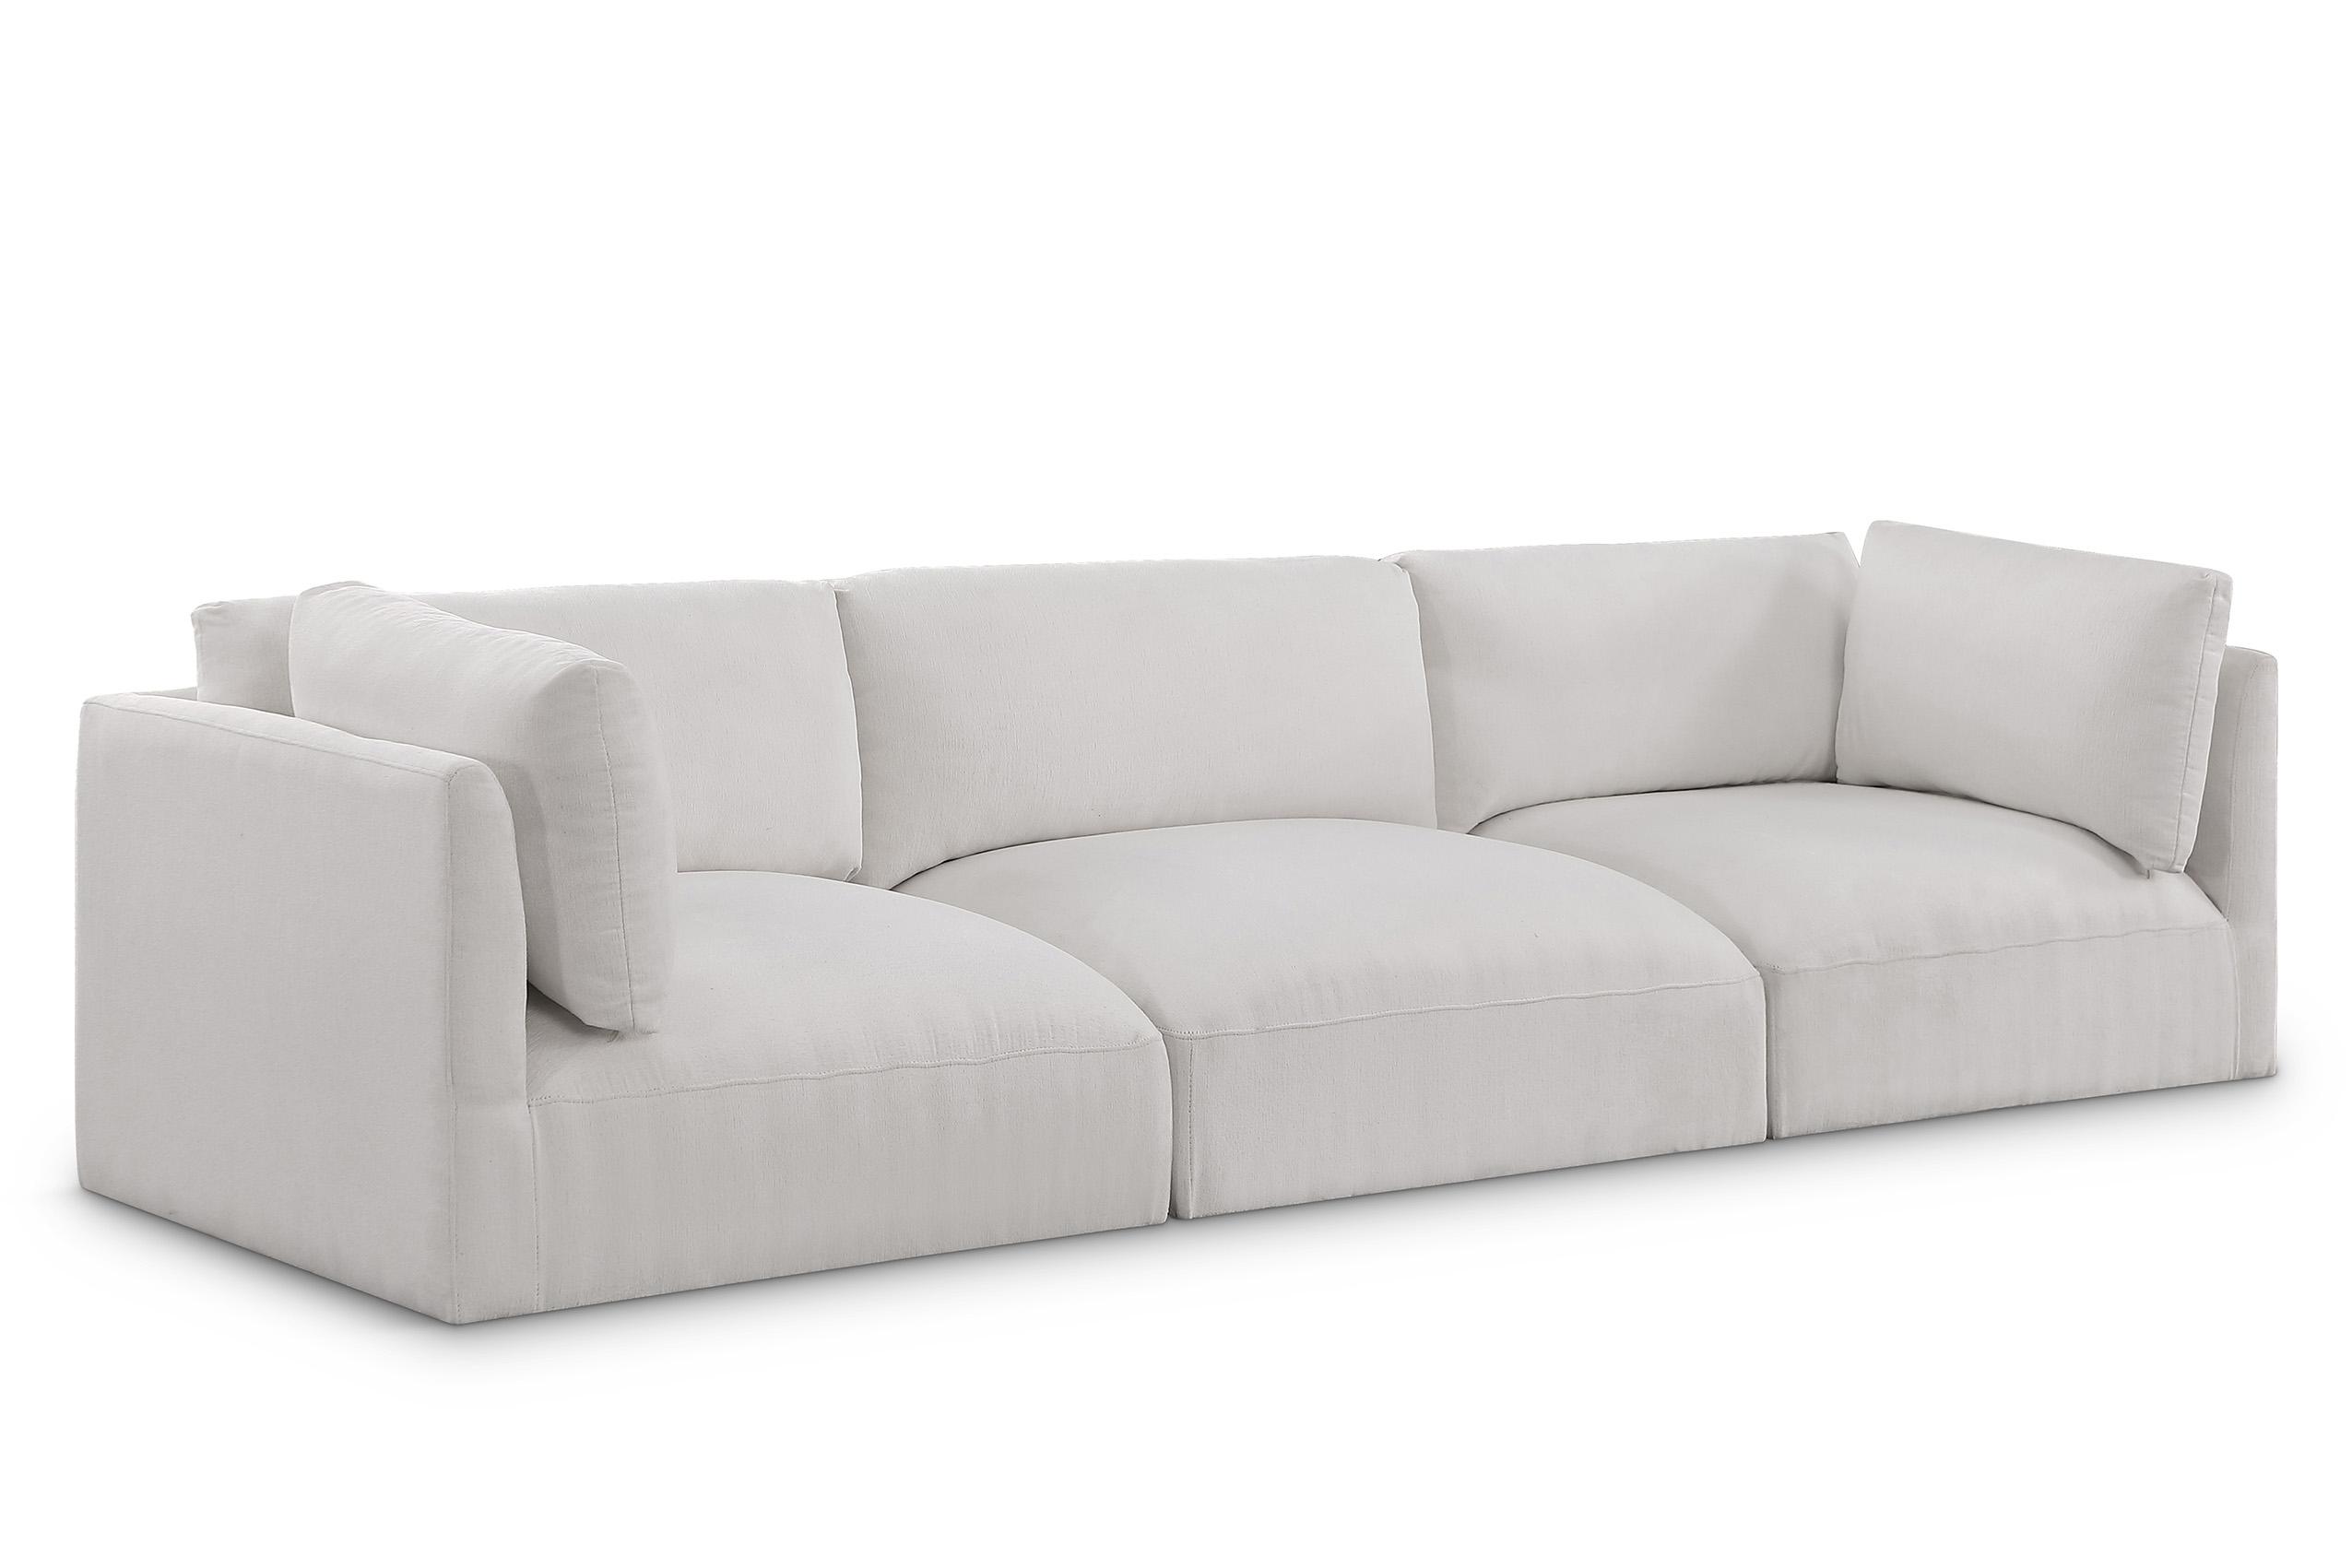 Contemporary, Modern Modular Sofa EASE 696Cream-S114B 696Cream-S114B in Cream Fabric